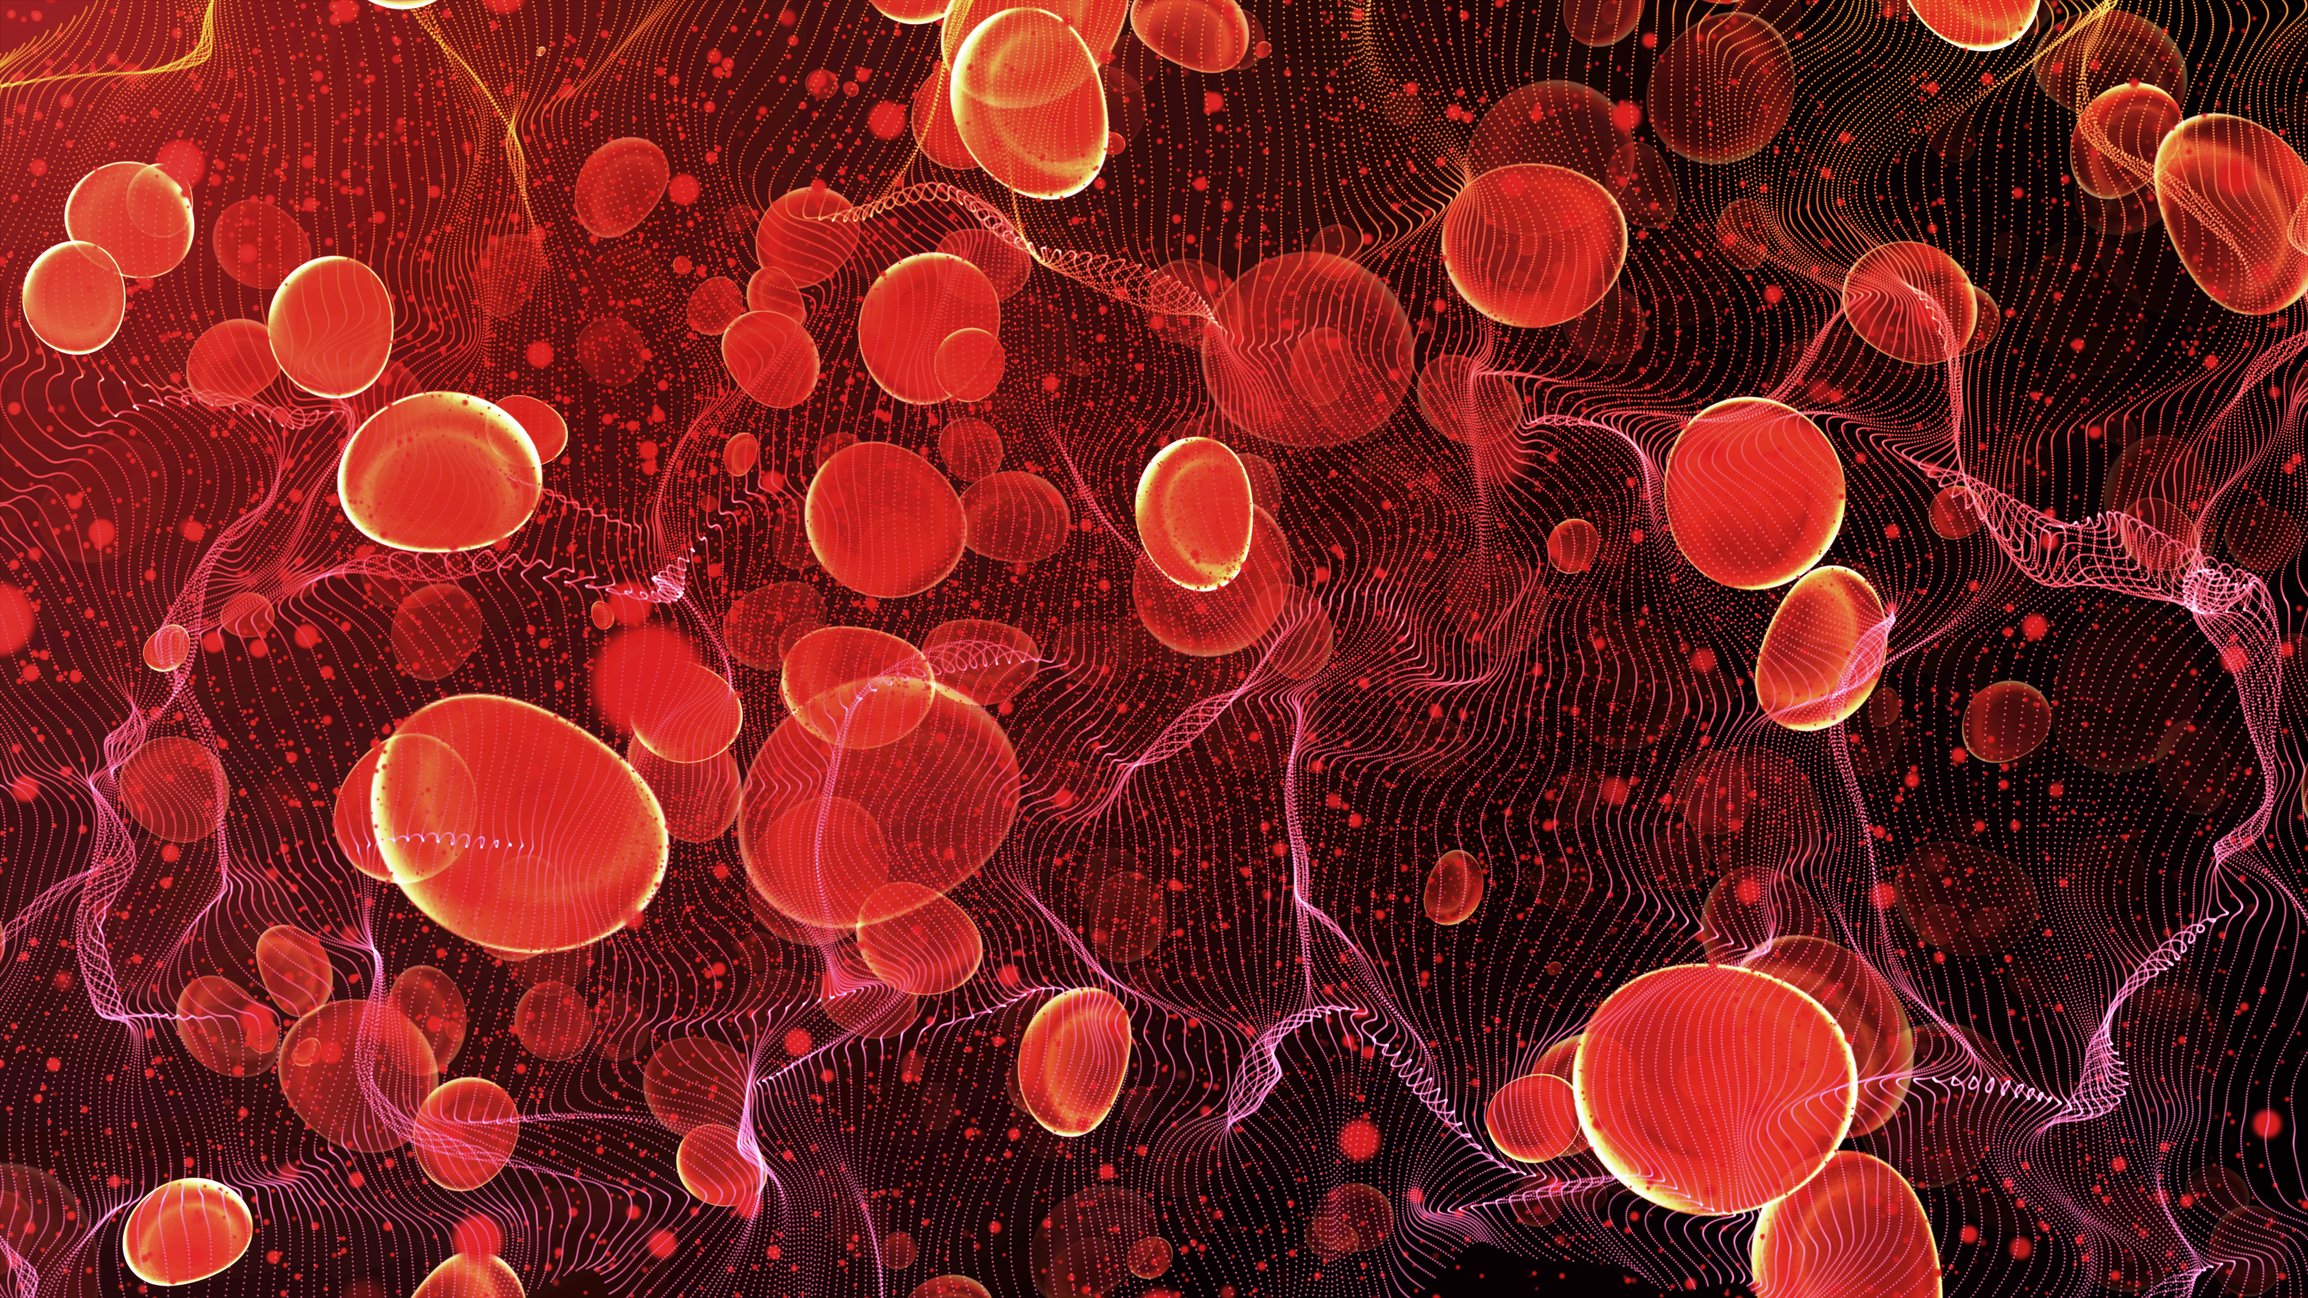 Hematology cells.